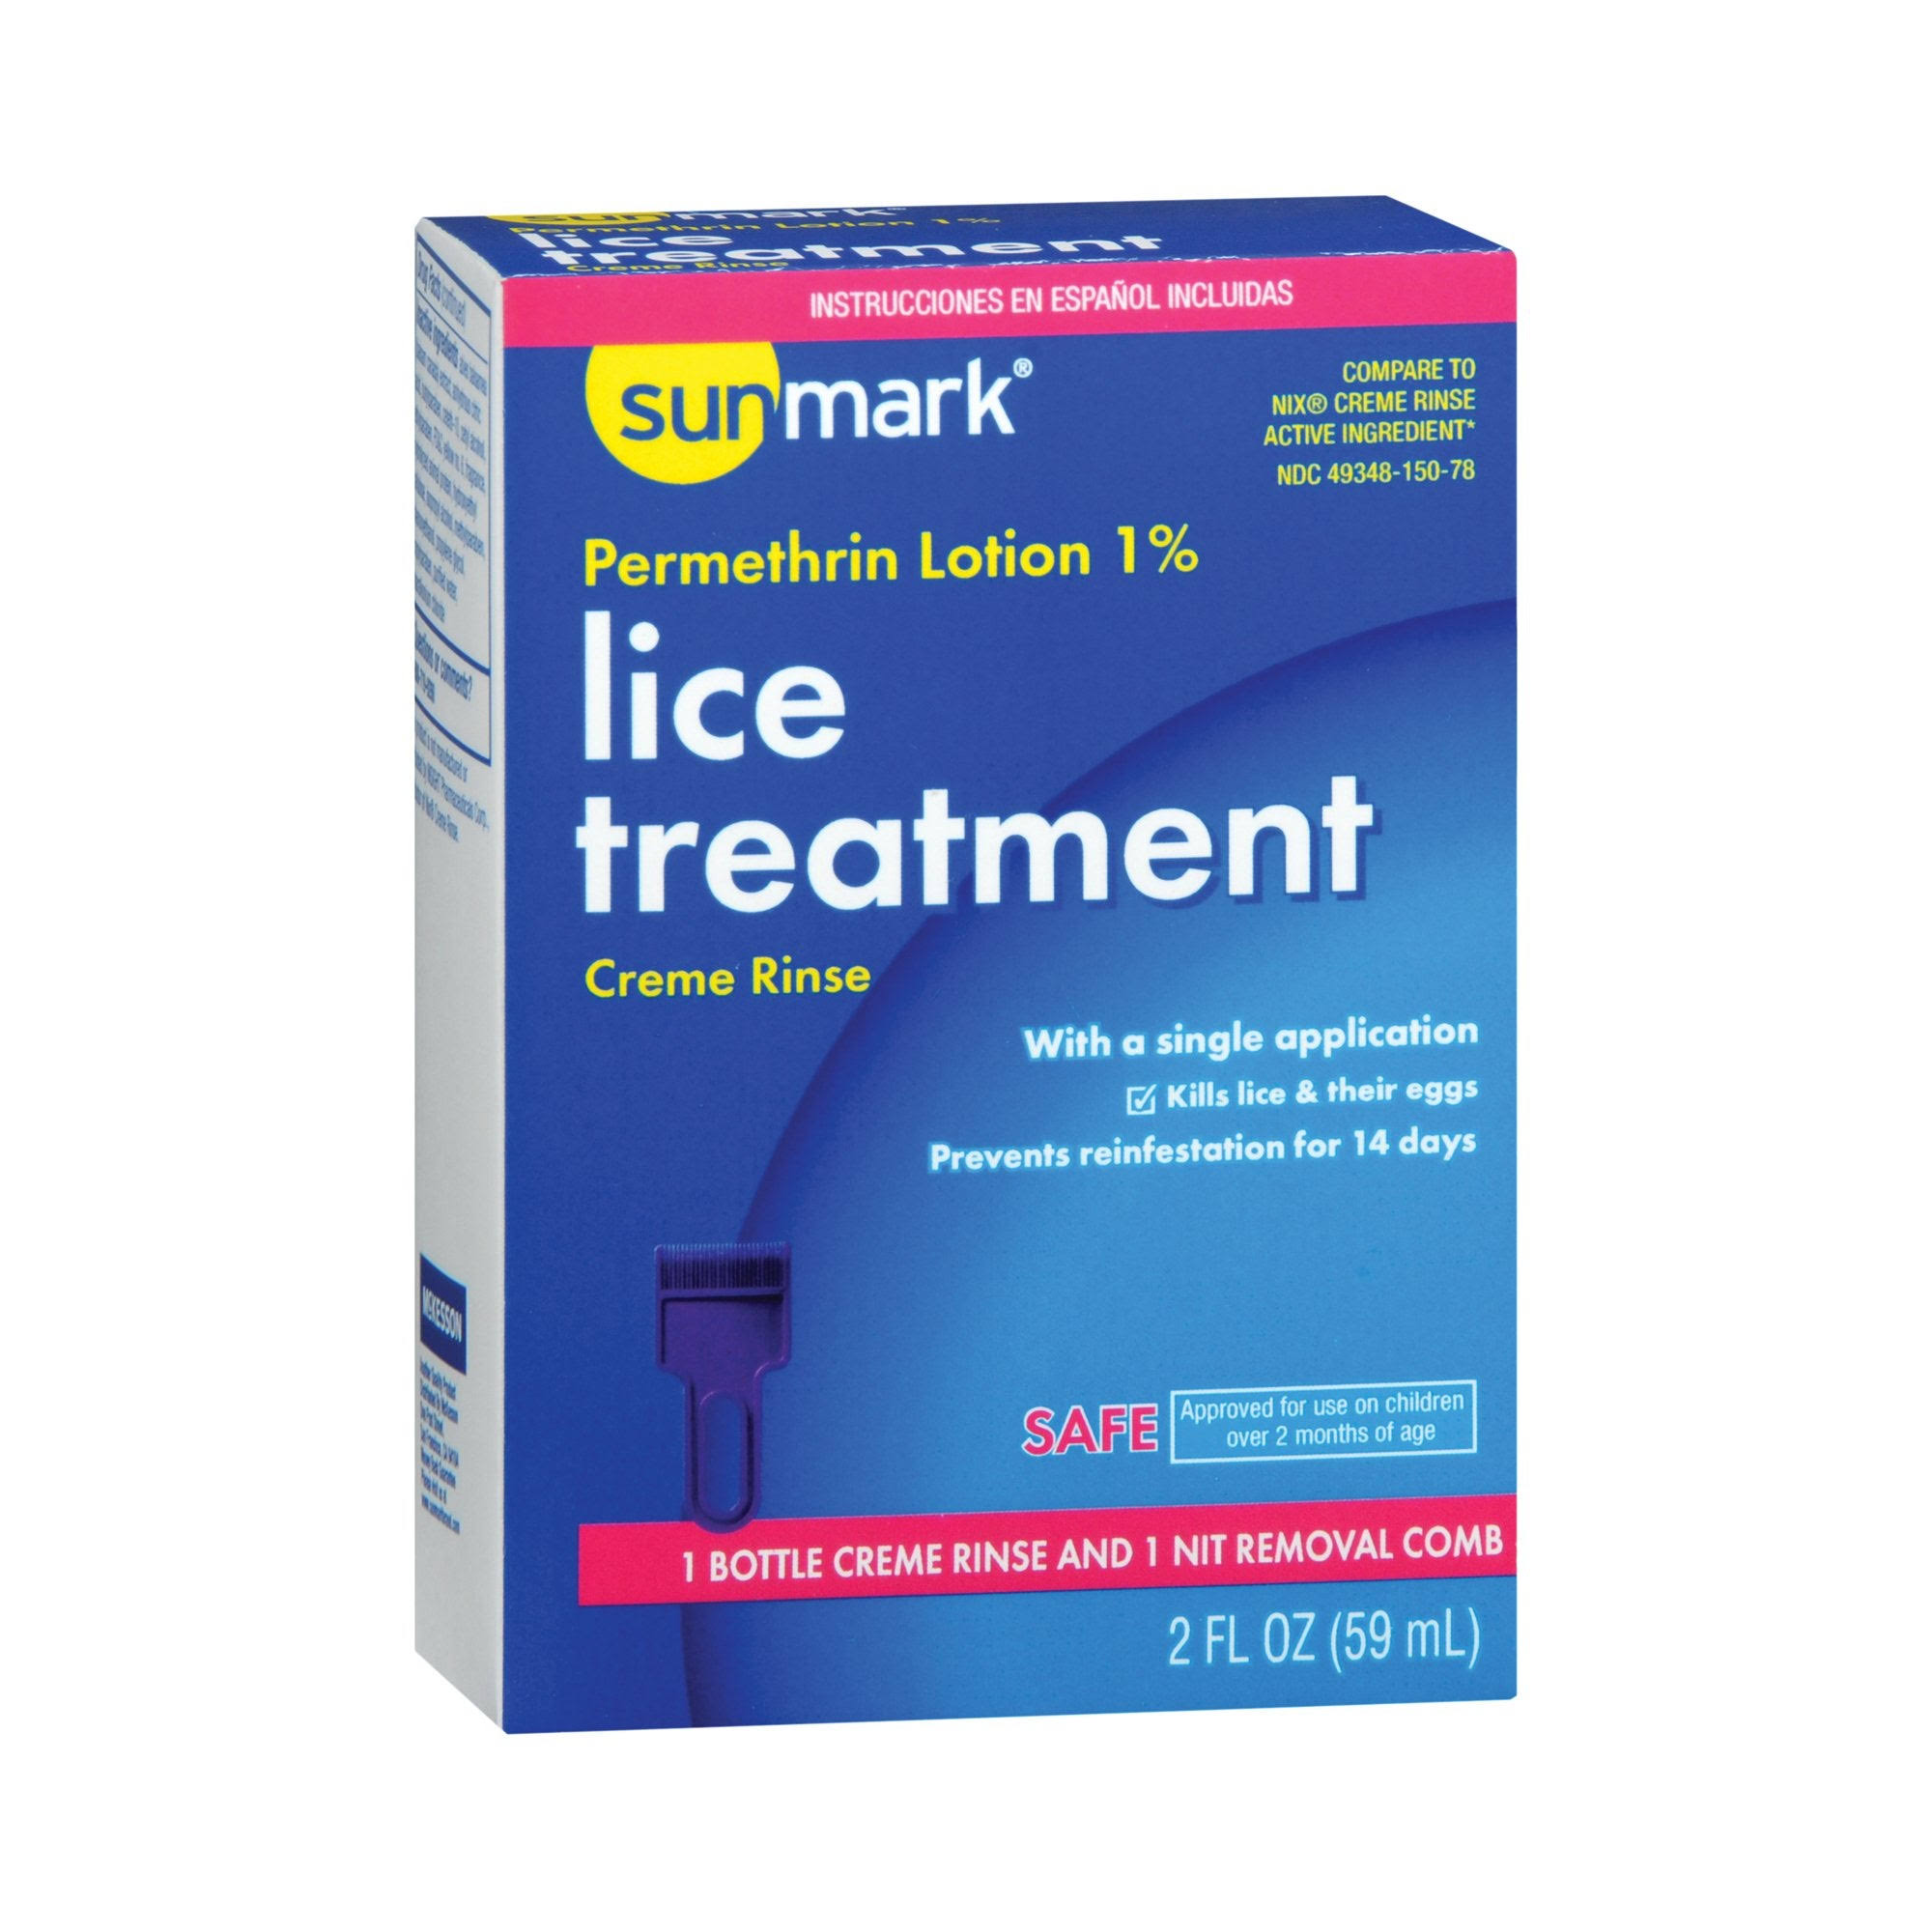 Sunmark Lice Treatment Creme Rinse - 2oz